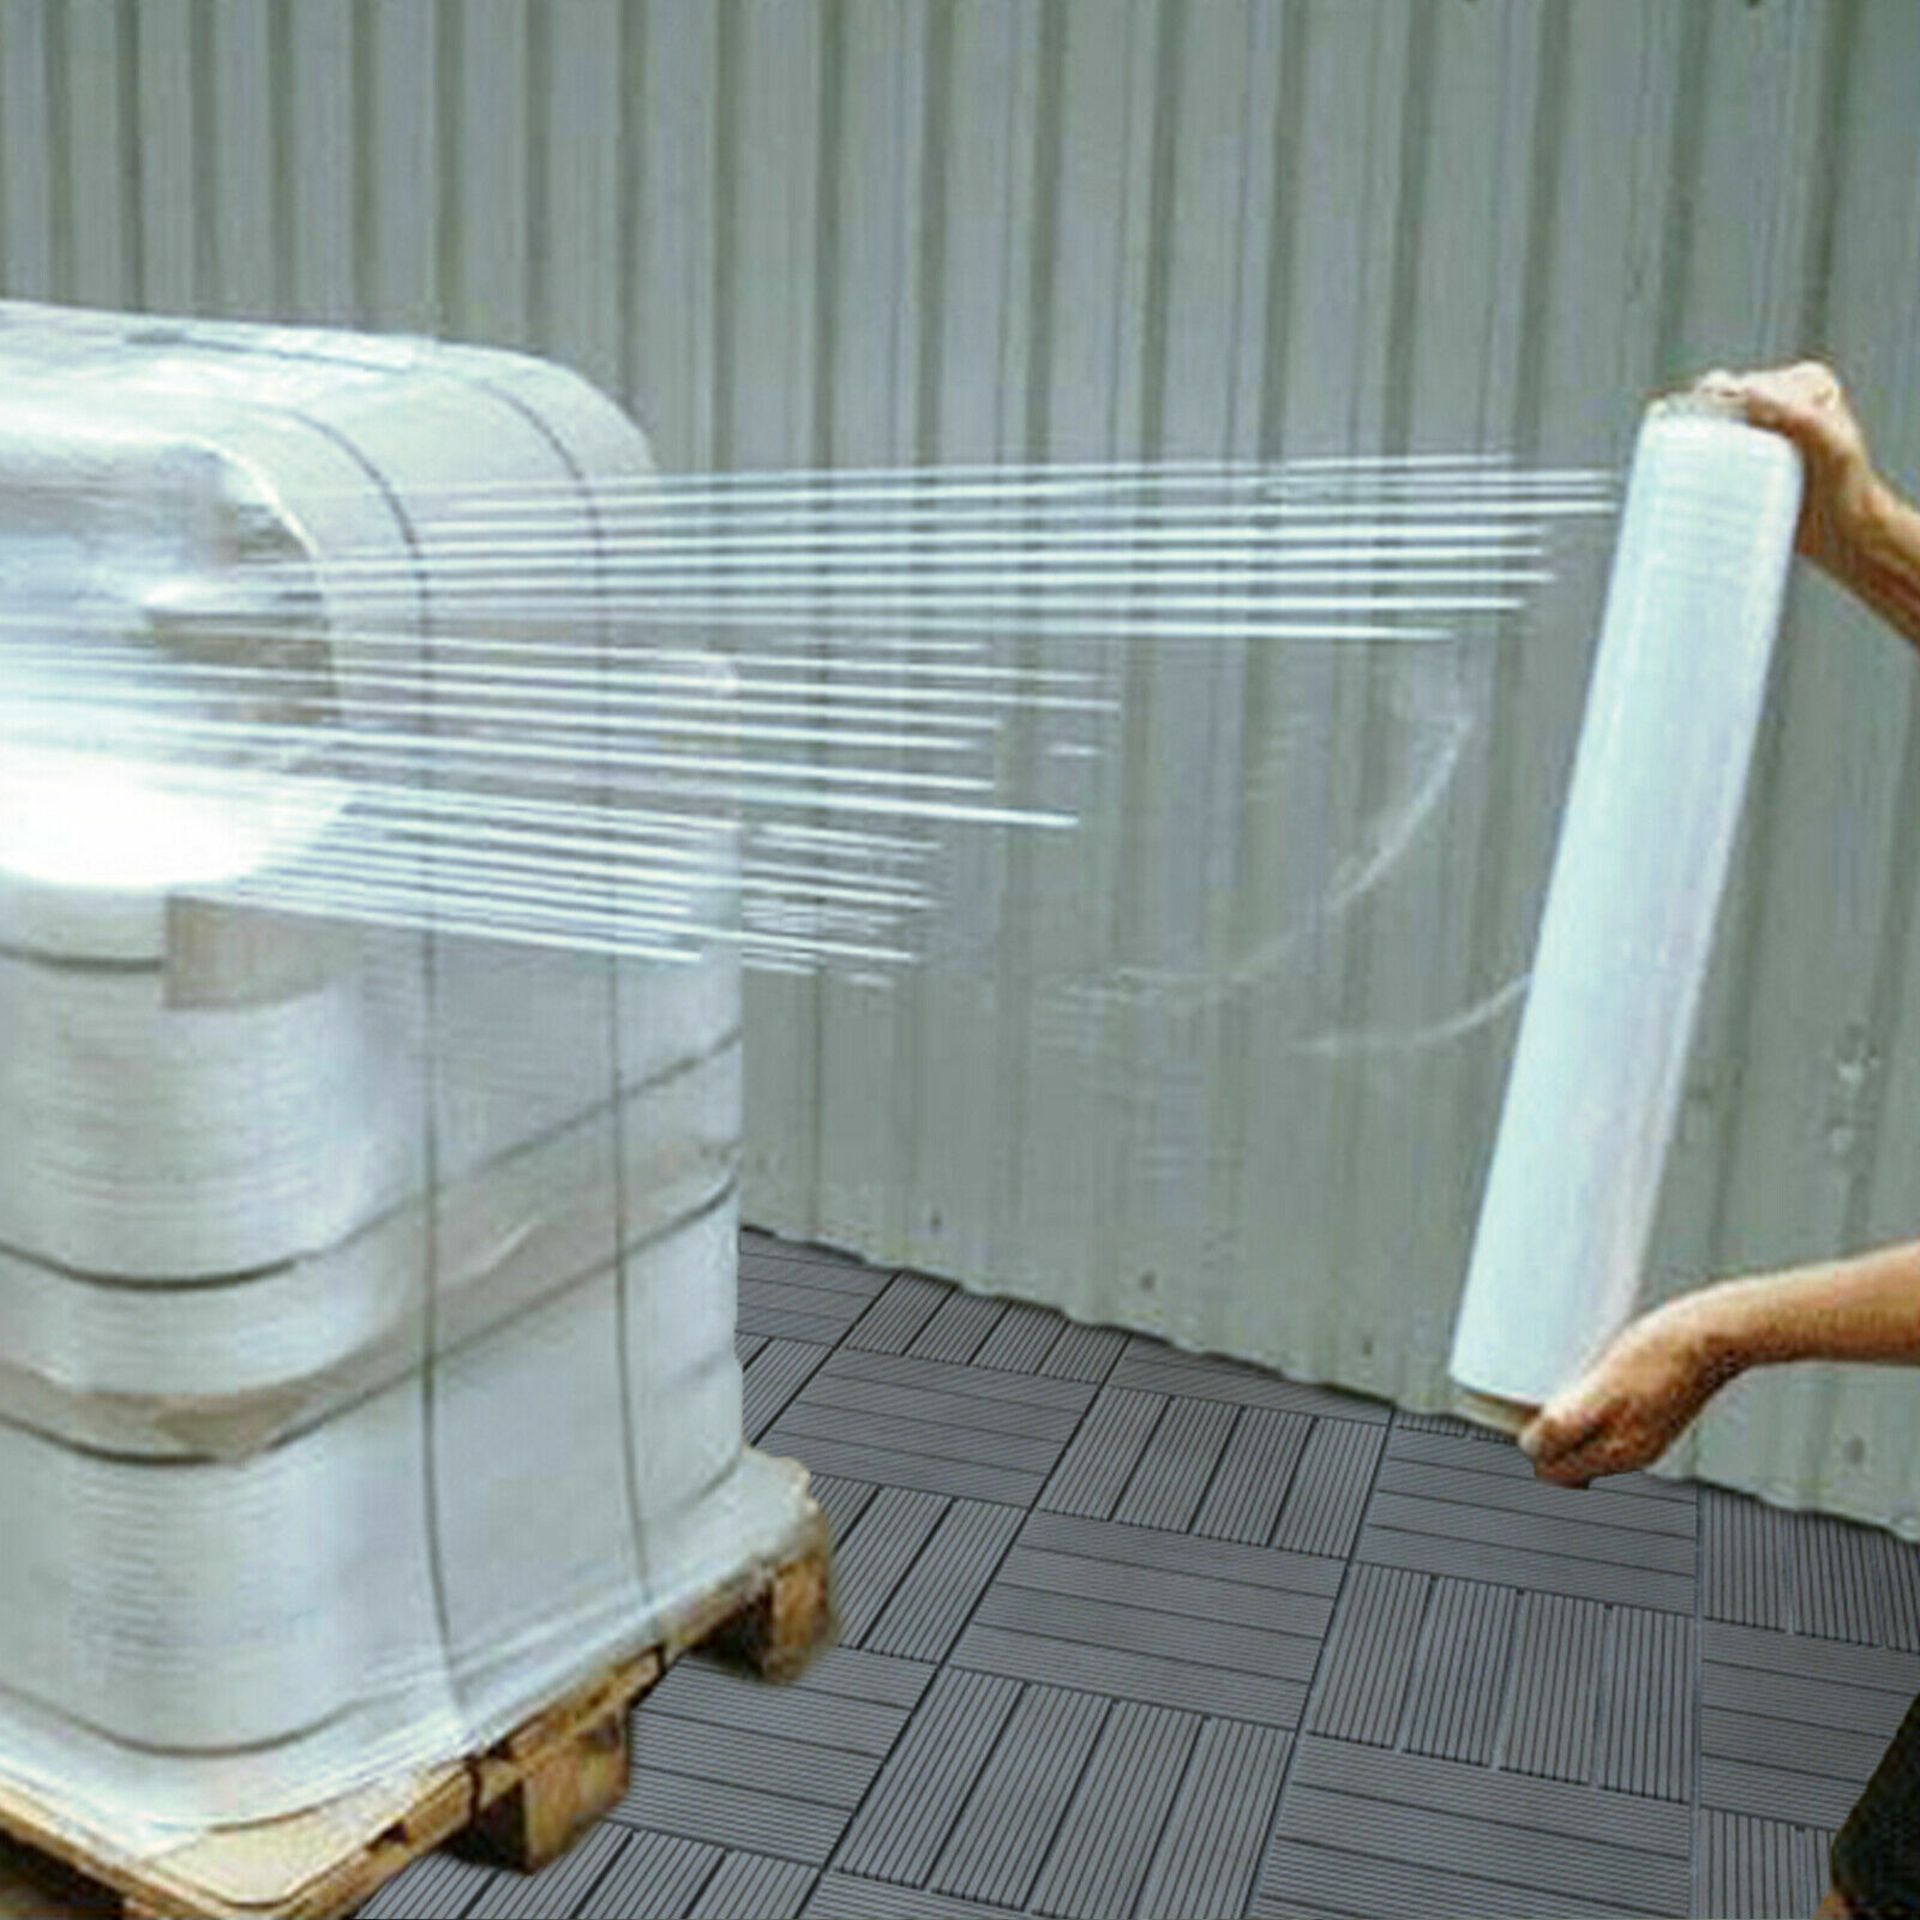 100x Rolls of Brand New Shrink / Pallet Wrap Film 25Mu 3.7kg Rolls *NO VAT* - Image 2 of 7